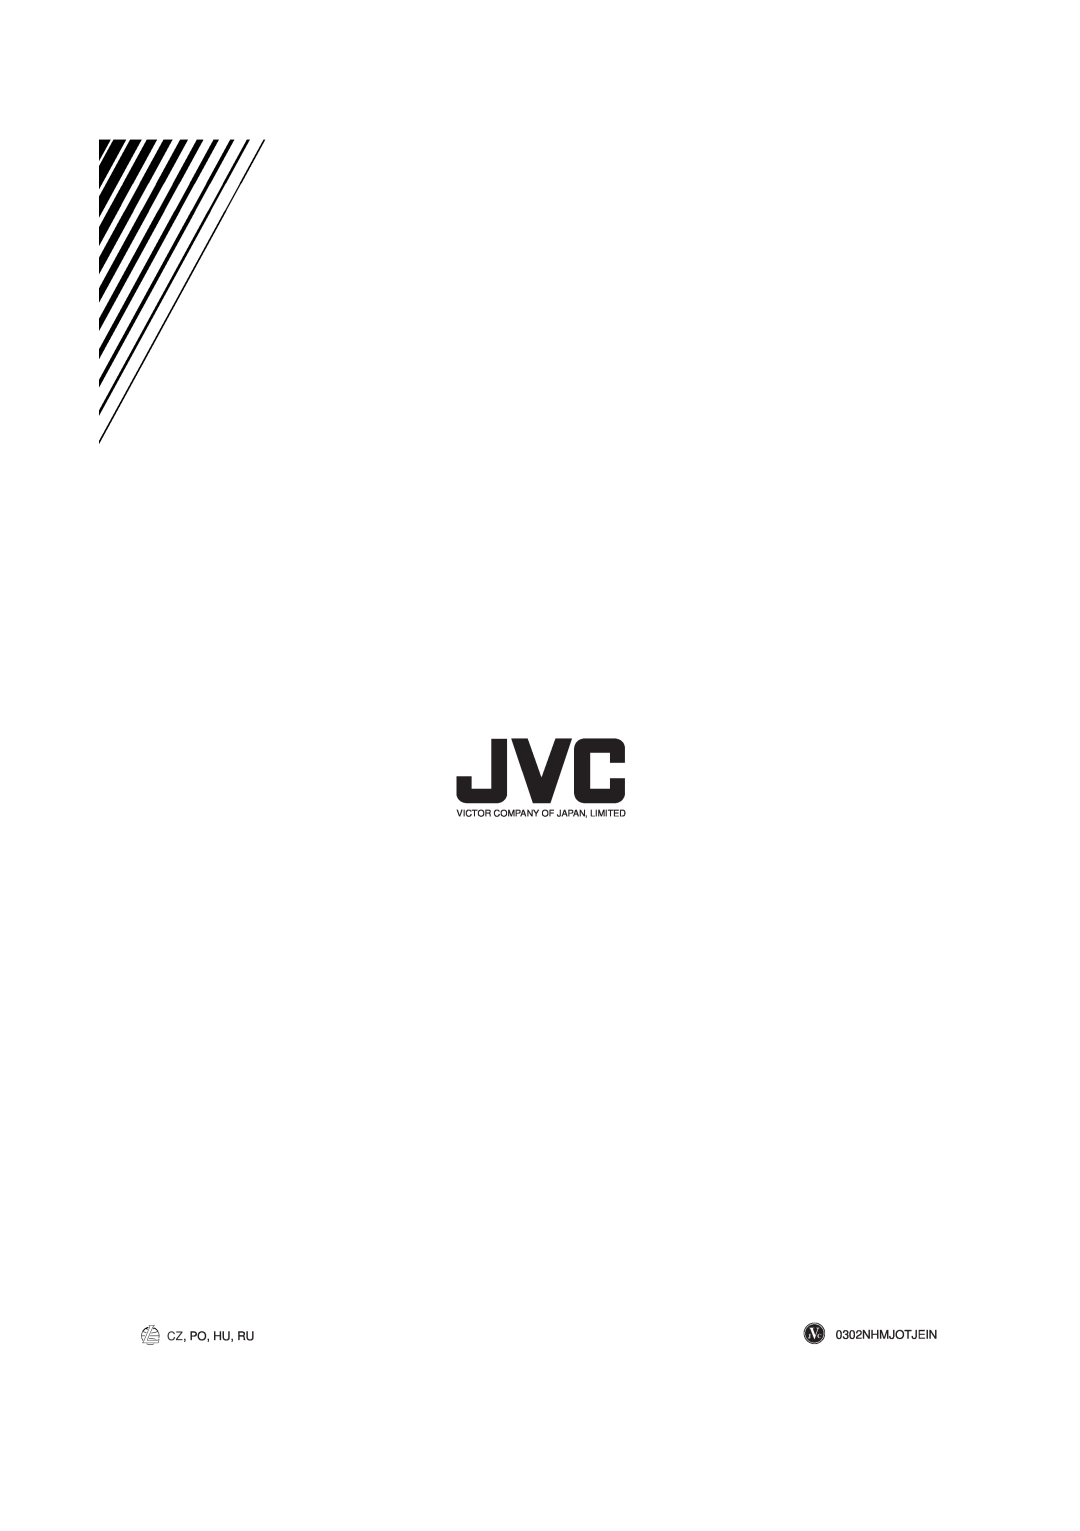 JVC RX-7022RSL manual Cz, Po, Hu, Ru, 0302NHMJOTJEIN, Victor Company Of Japan, Limited 